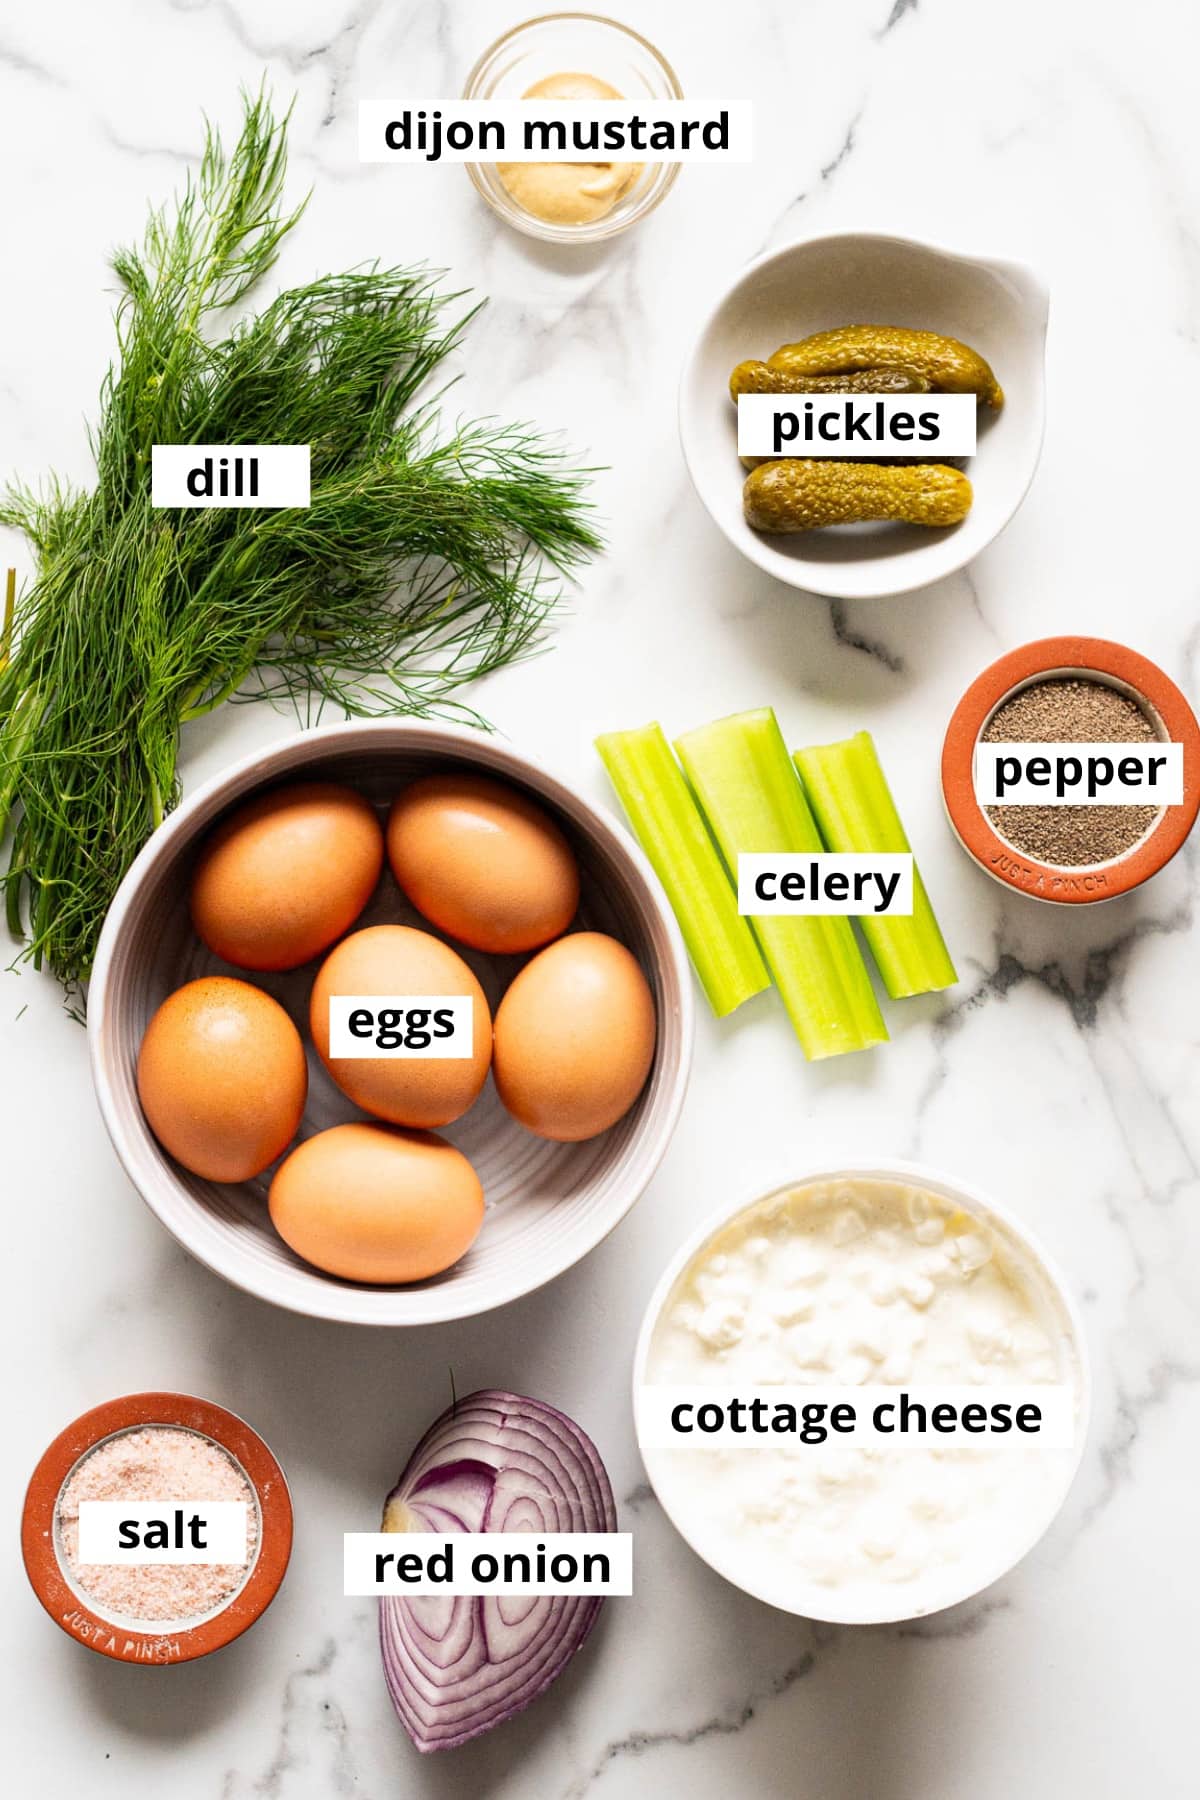 Dill, dijon mustard, pickles, salt, pepper, celery, eggs, cottage cheese, red onion, salt.